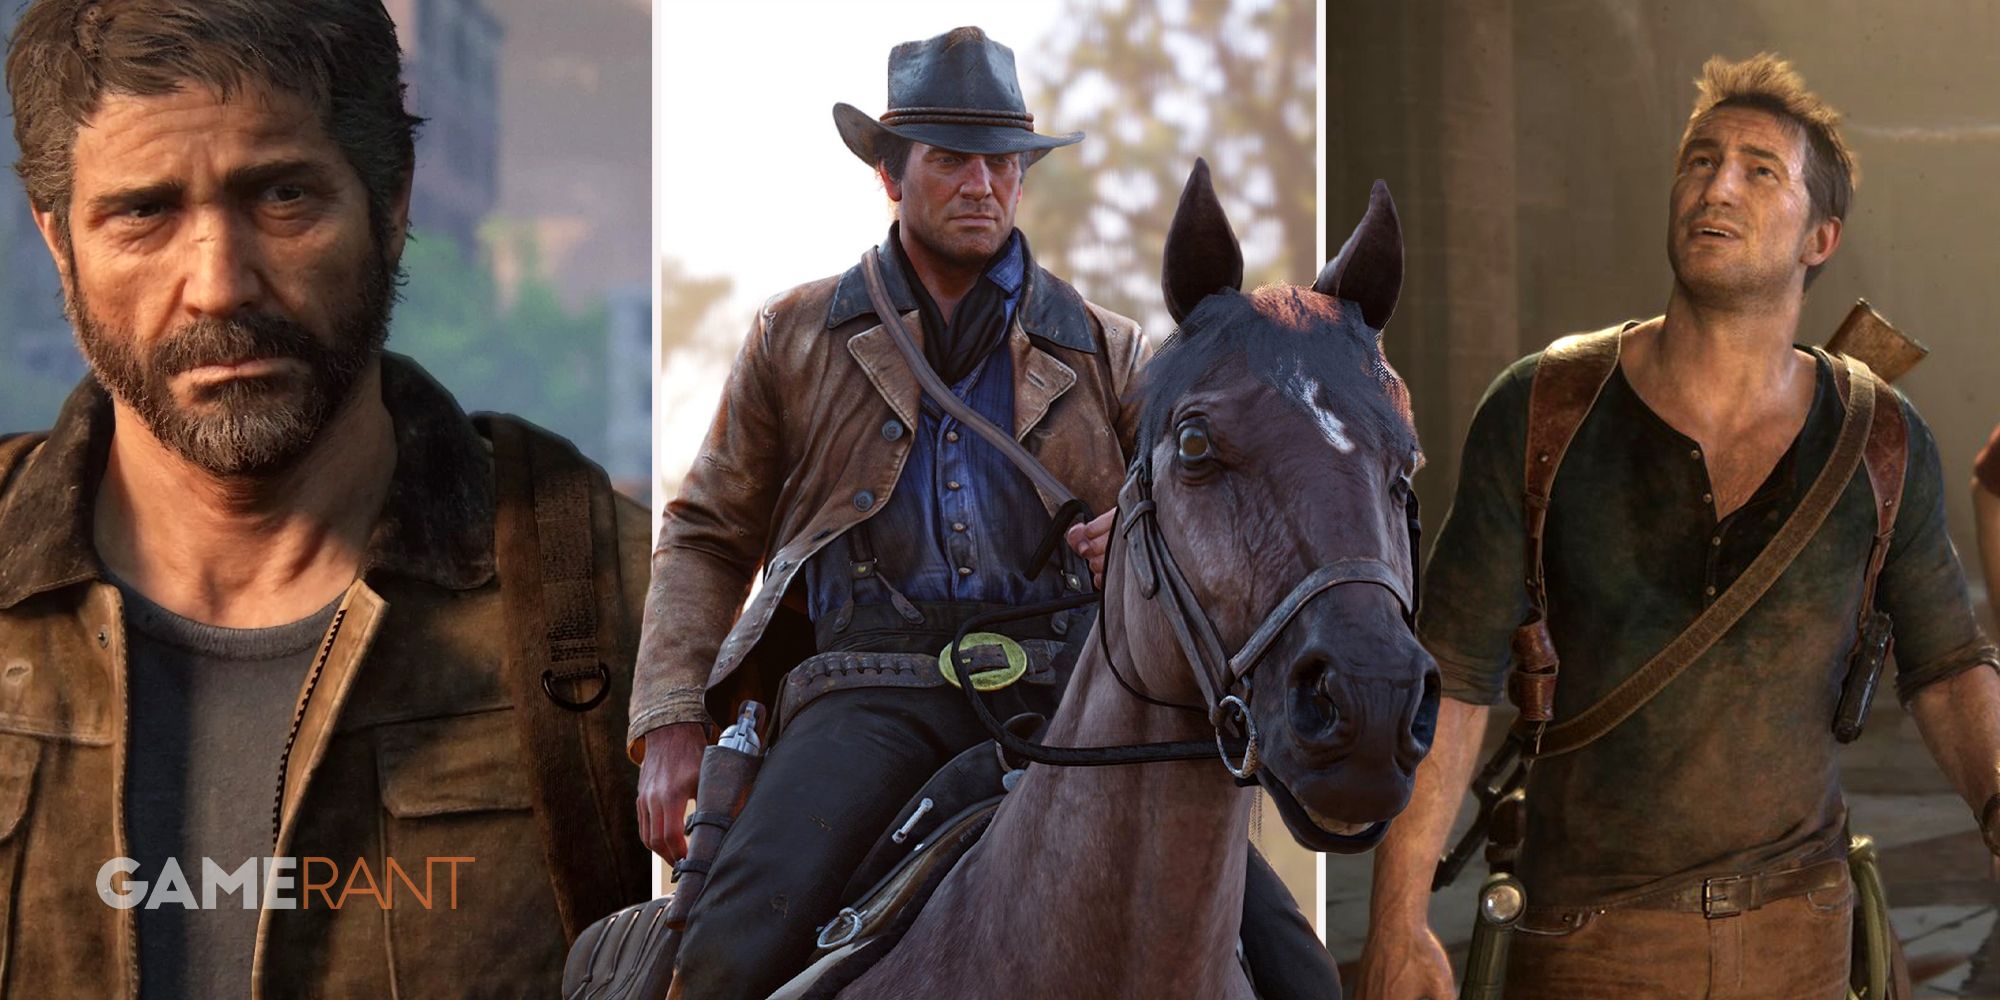 Джоэл Миллер (The Last Of Us) слева, Артур Морган (Red Dead Redemption 2) на лошади посередине, Натан Дрейк (Uncharted) смотрит вверх справа